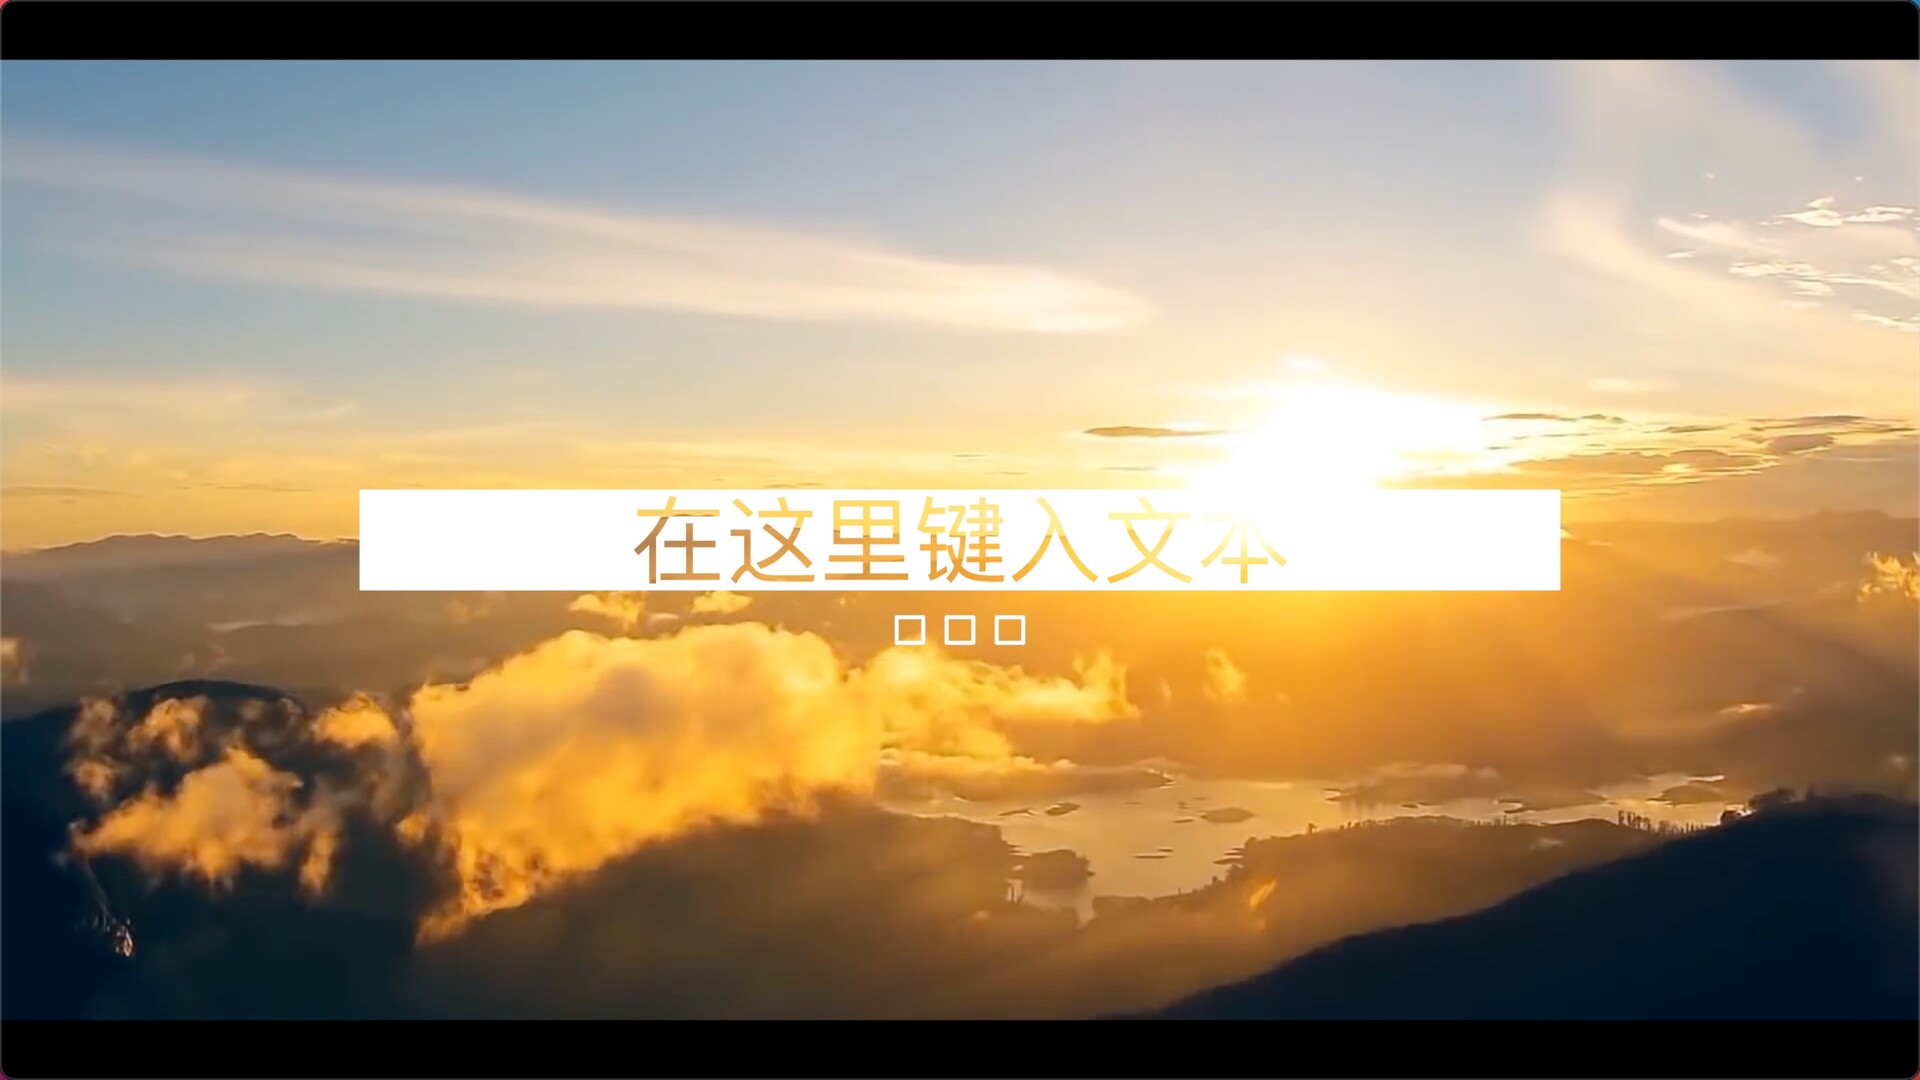 fcpx插件：Subtitle animation(清新简约字幕动画)